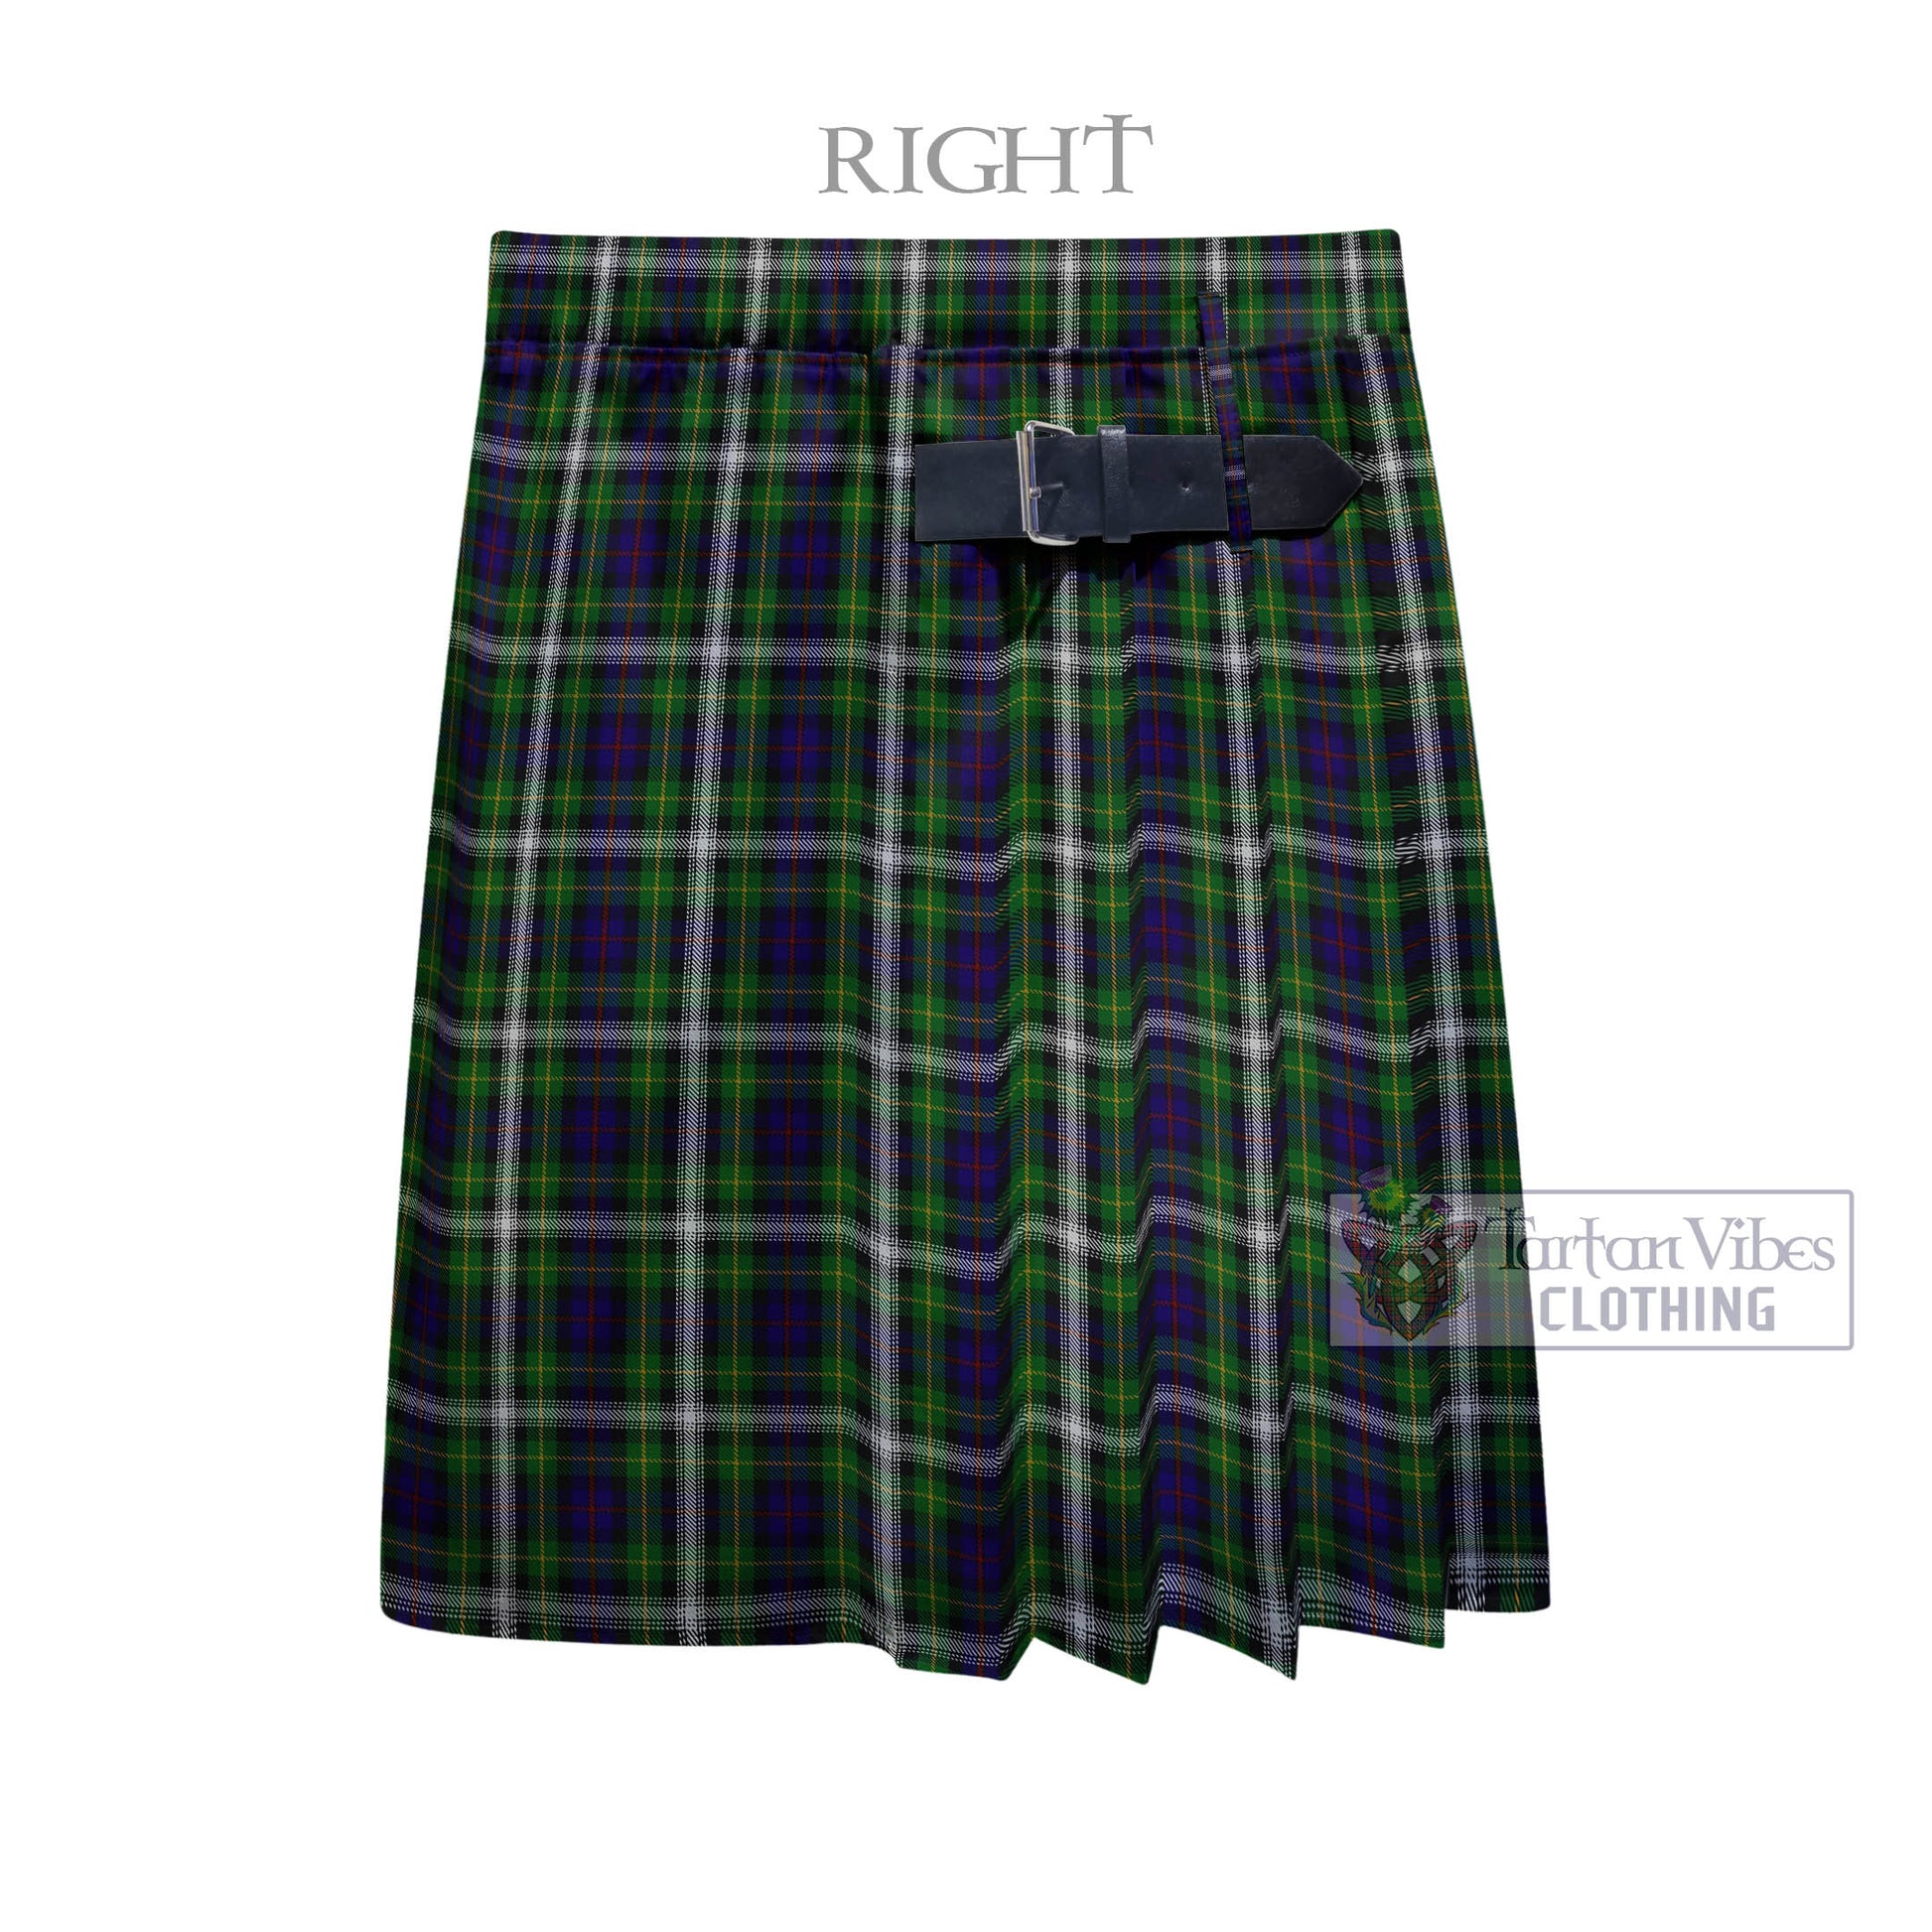 Tartan Vibes Clothing Farquharson Dress Tartan Men's Pleated Skirt - Fashion Casual Retro Scottish Style